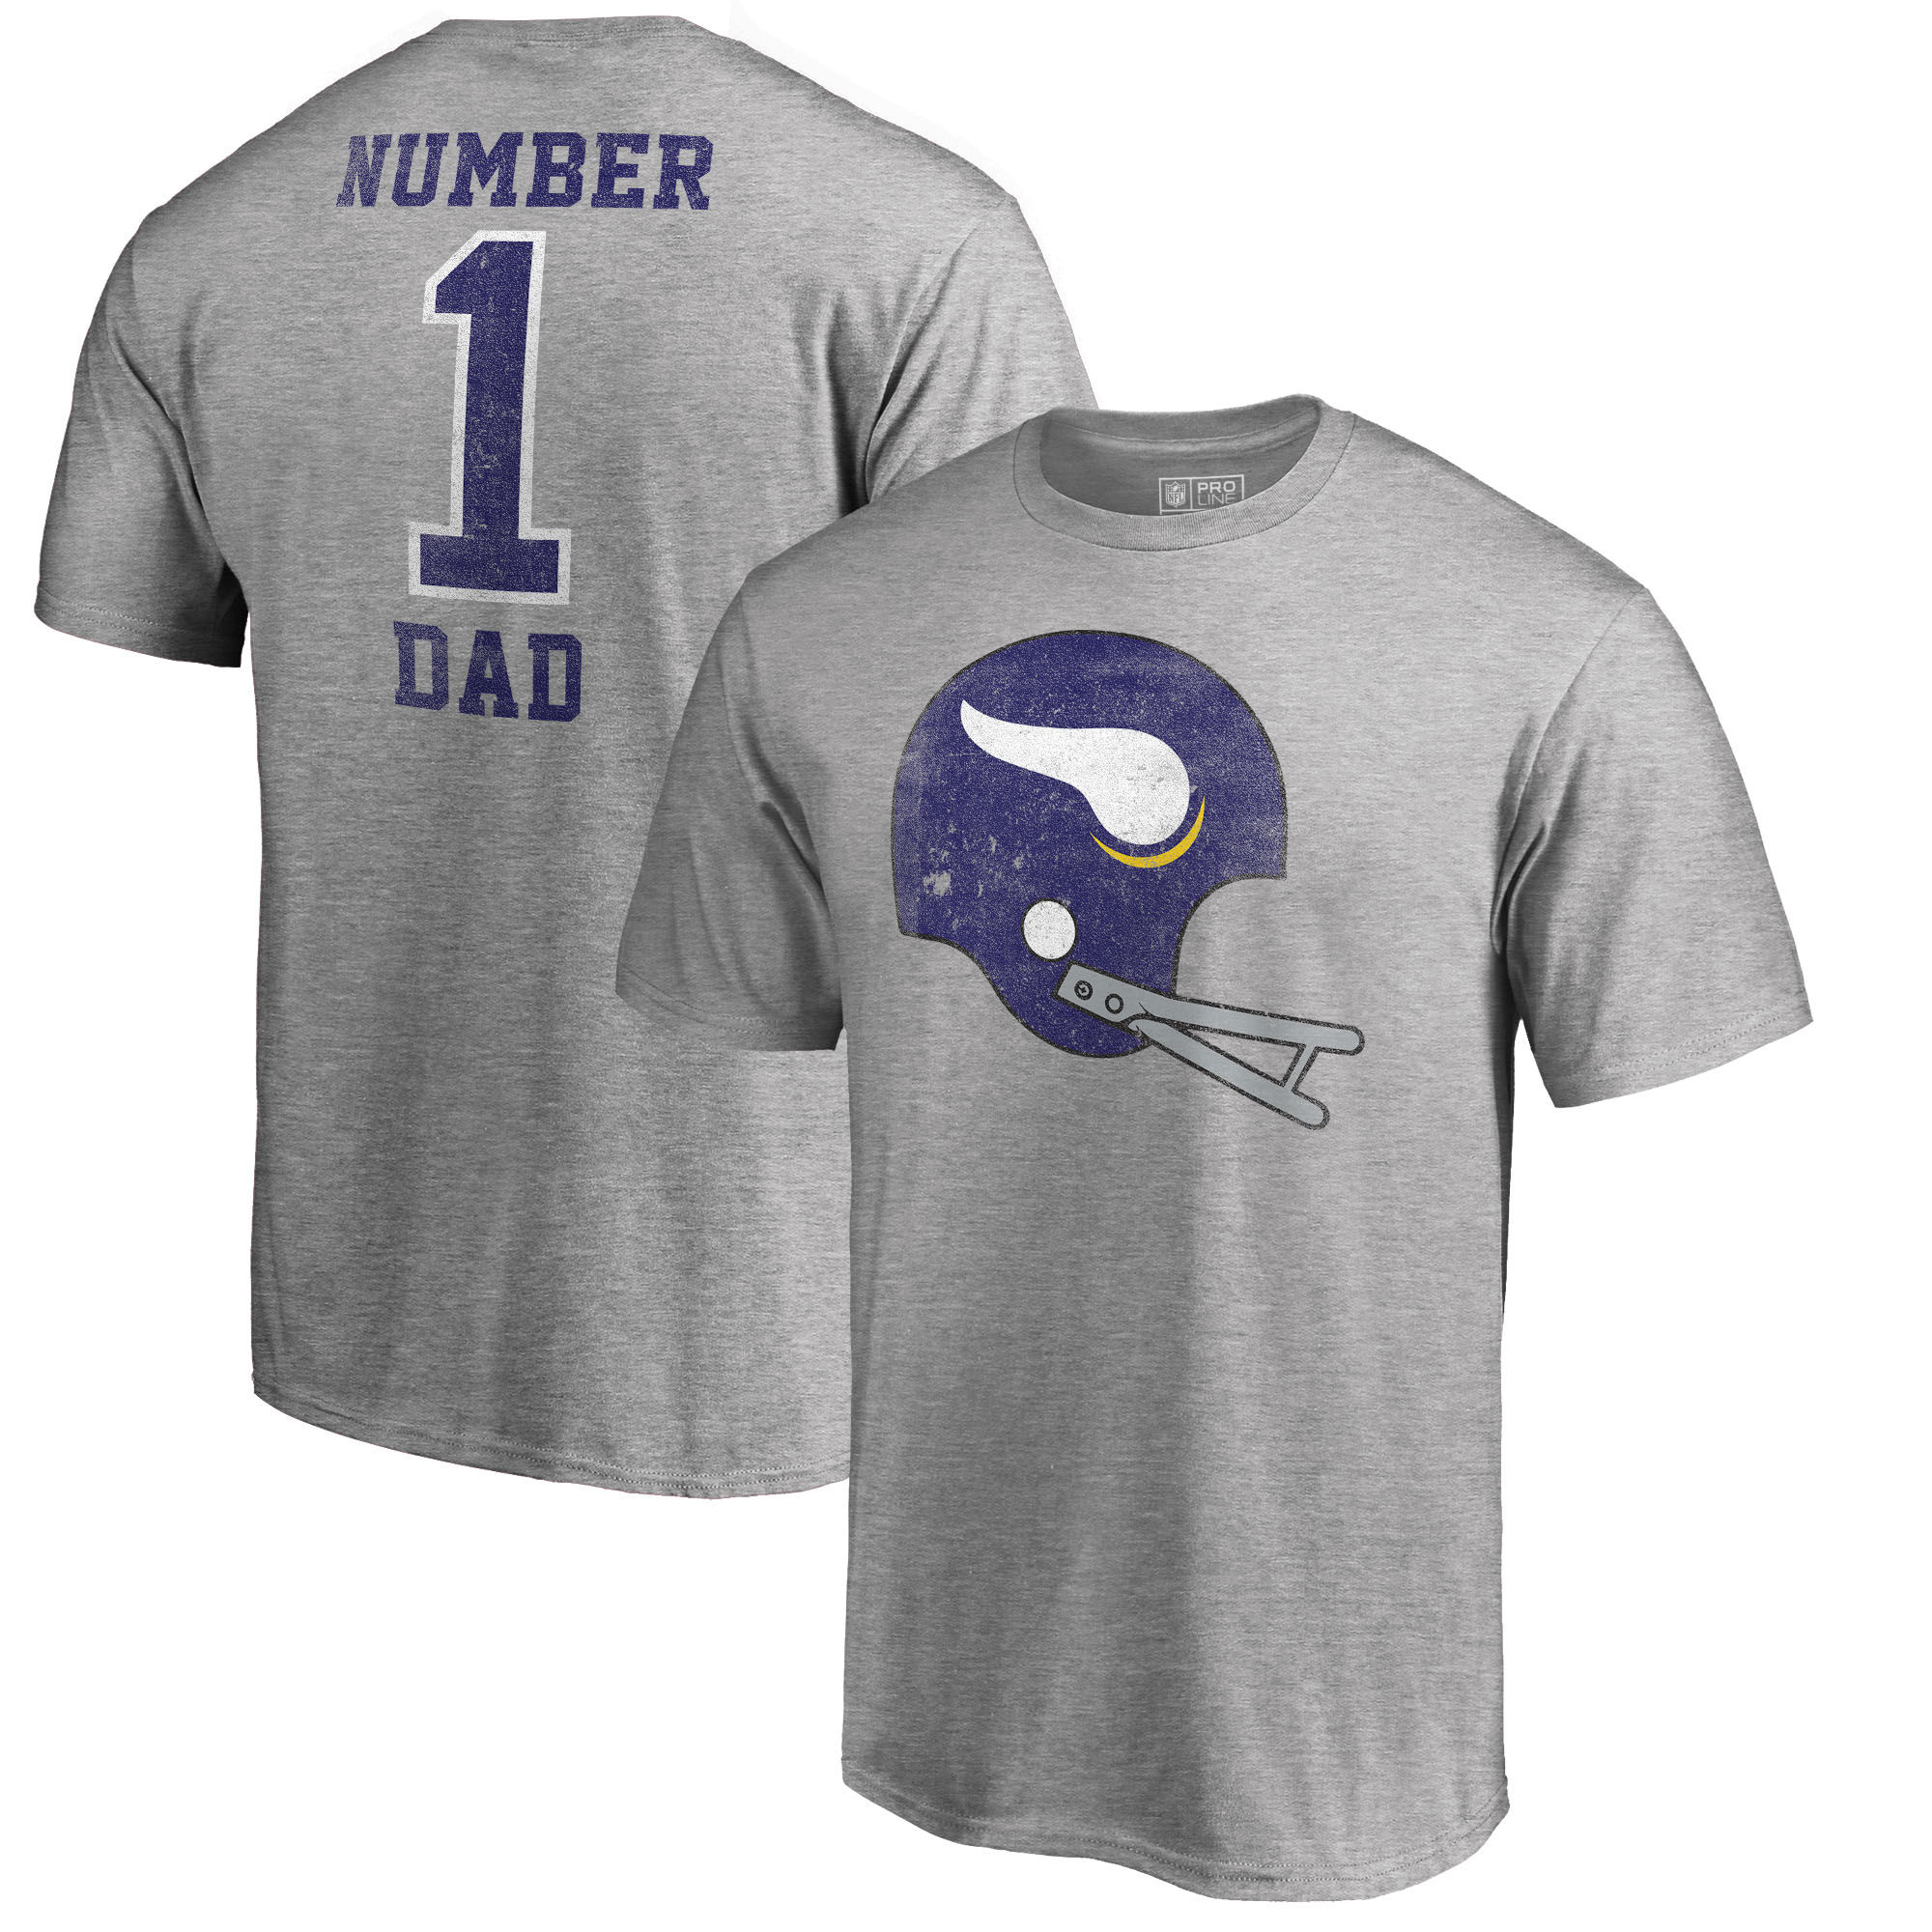 Minnesota Vikings NFL Pro Line by Fanatics Branded Heathered Gray Big and Tall Greatest Dad Retro Tri-Blend T-Shirt